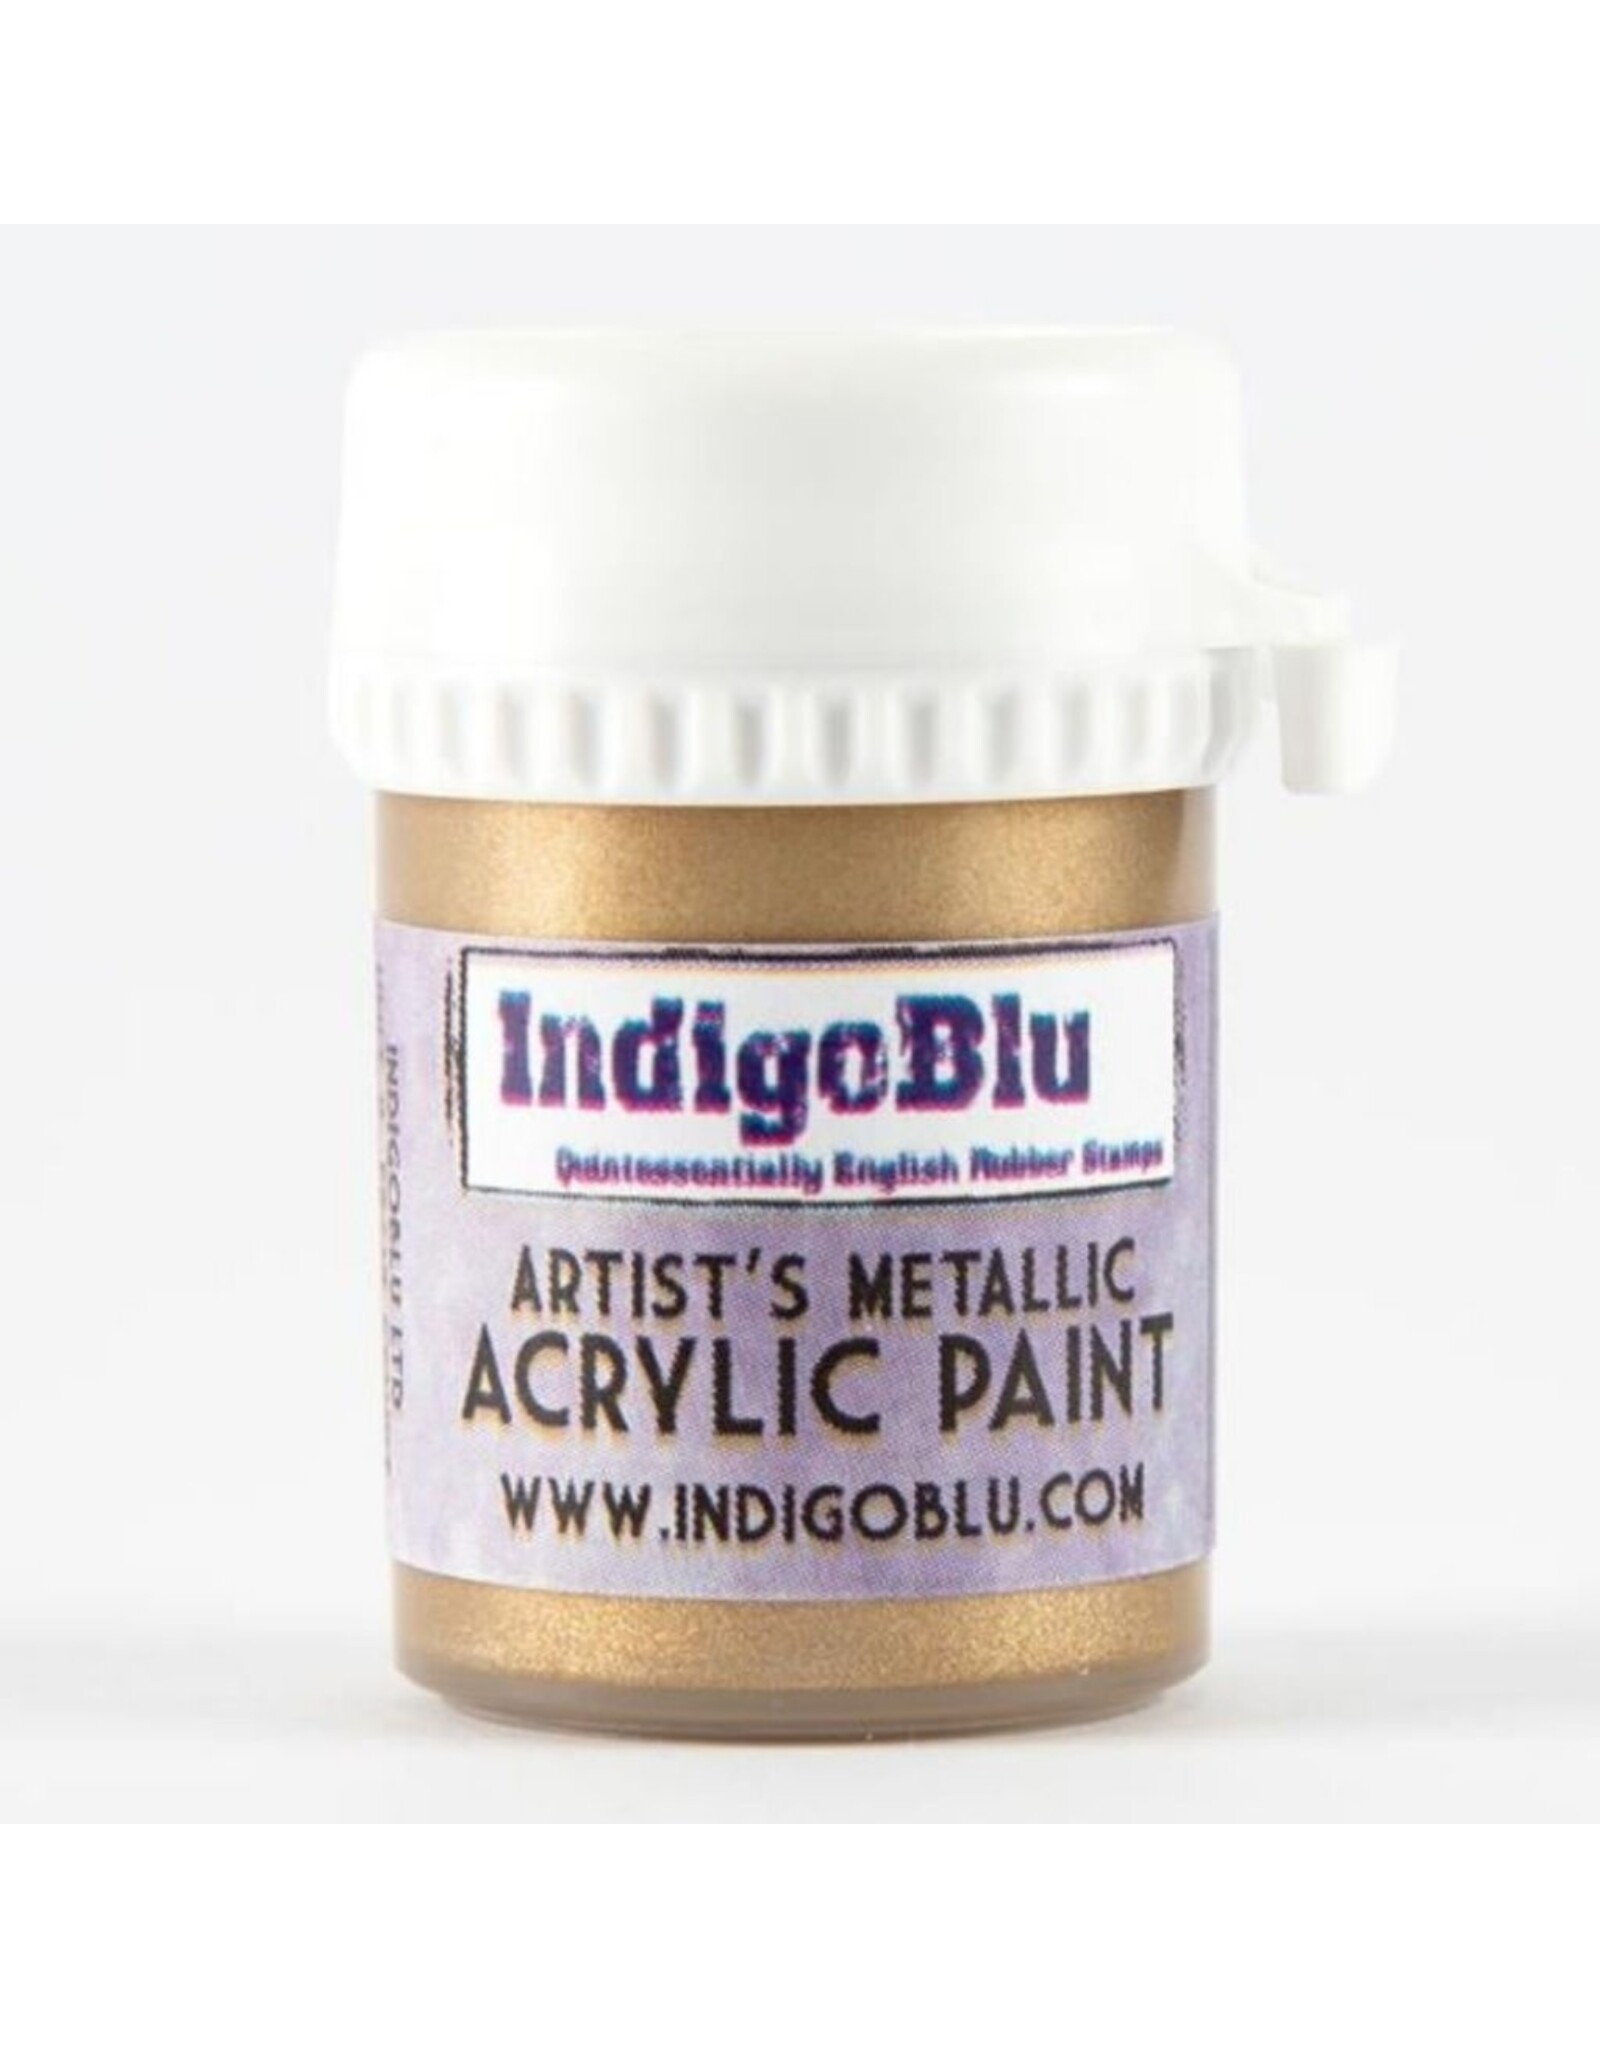 INDIGO BLU INDIGOBLU FOOL'S GOLD ARTIST'S METALLIC ACRYLIC PAINT 20ml